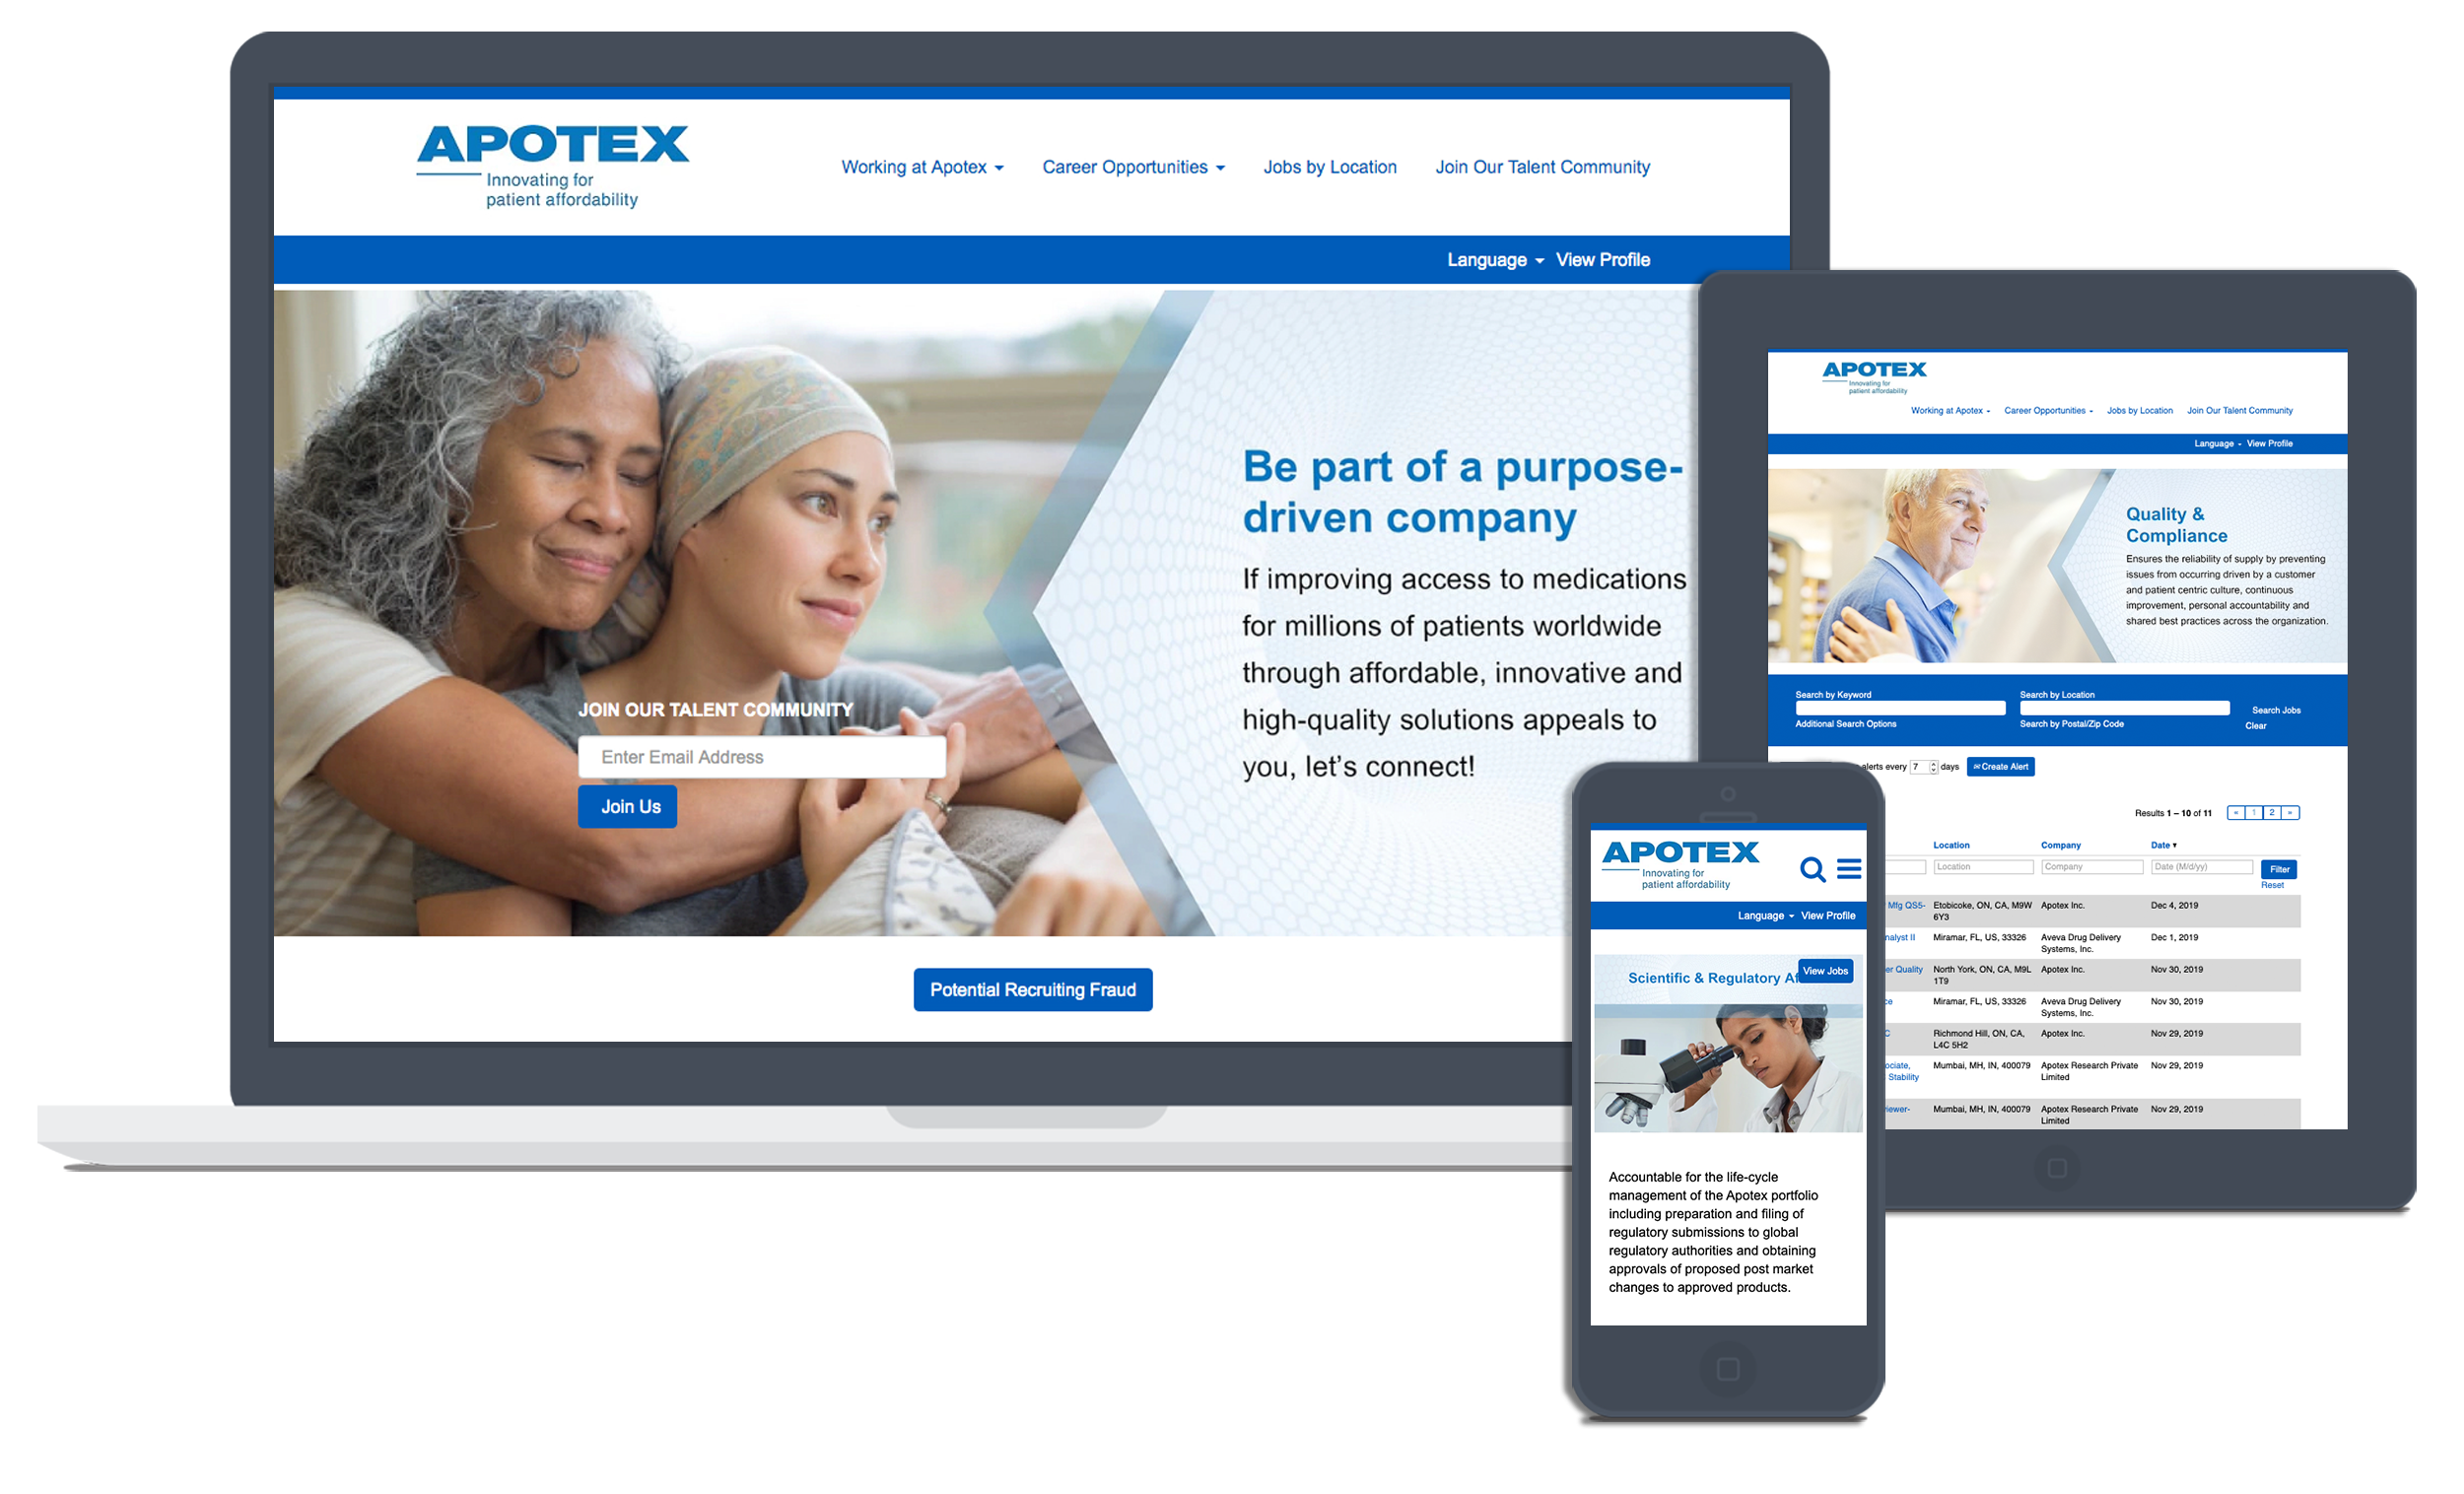 Custom design of visual assets for Apotex careers website. Designed by Neglia Design.